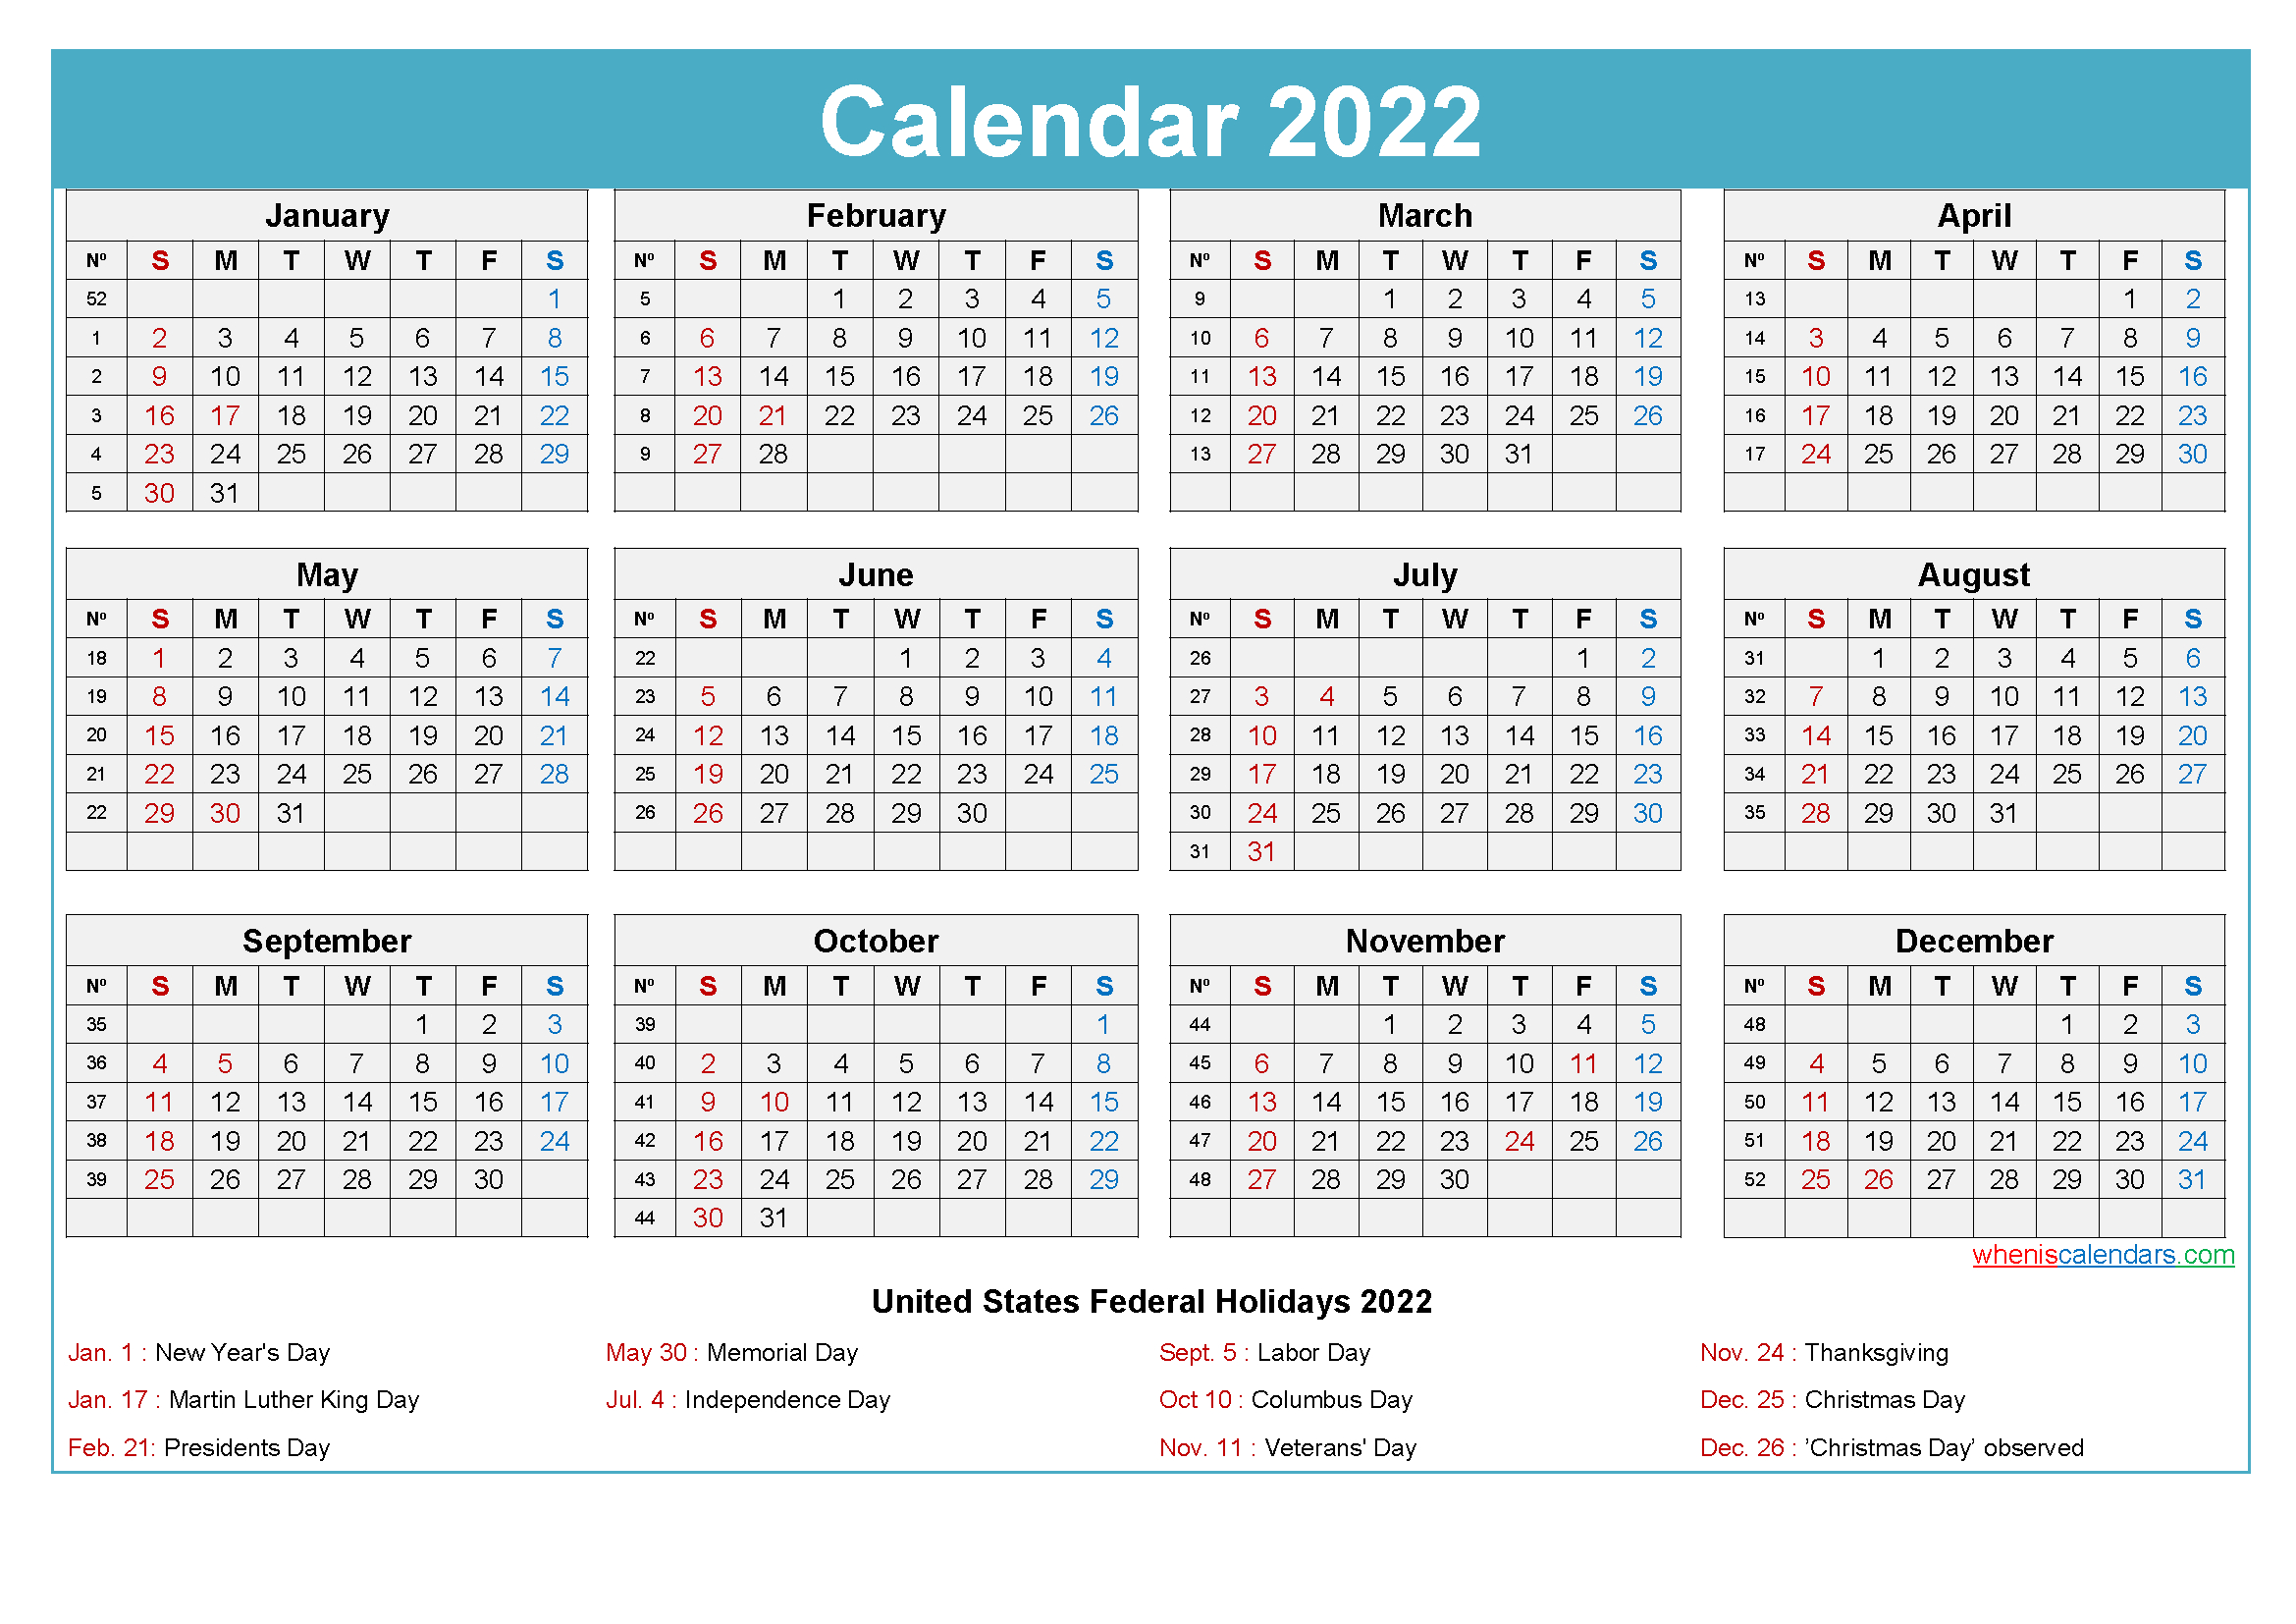 Maxine Desk Calendar 2022 With Holidays Printable-2022 Calendar With Holidays Printable